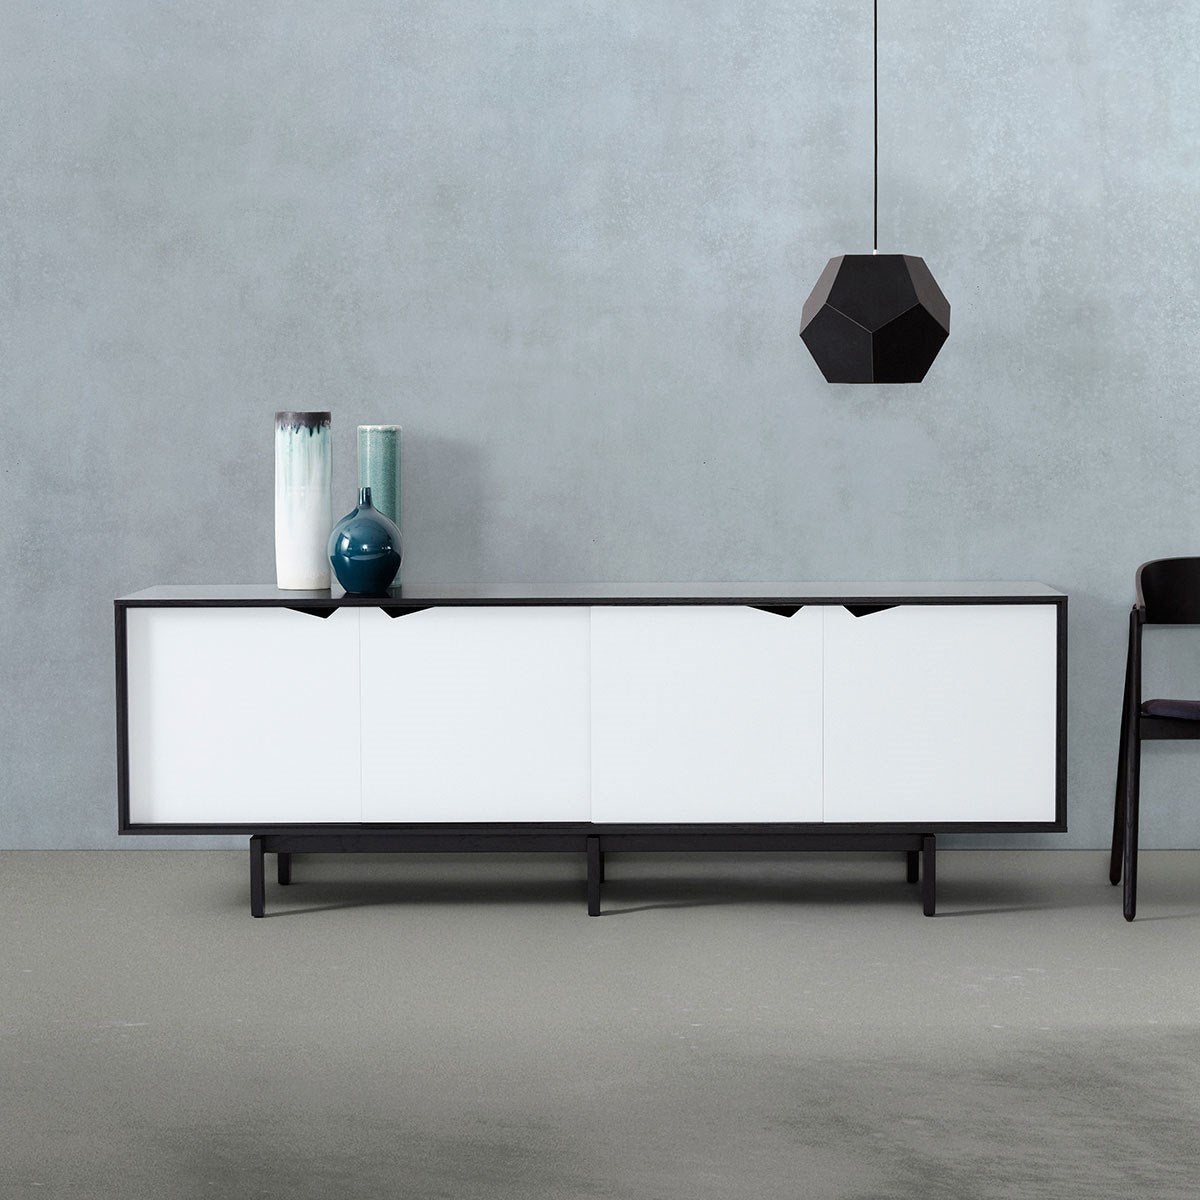 Andersen Furniture S1 Sideboard Black, White Drawers, 200cm